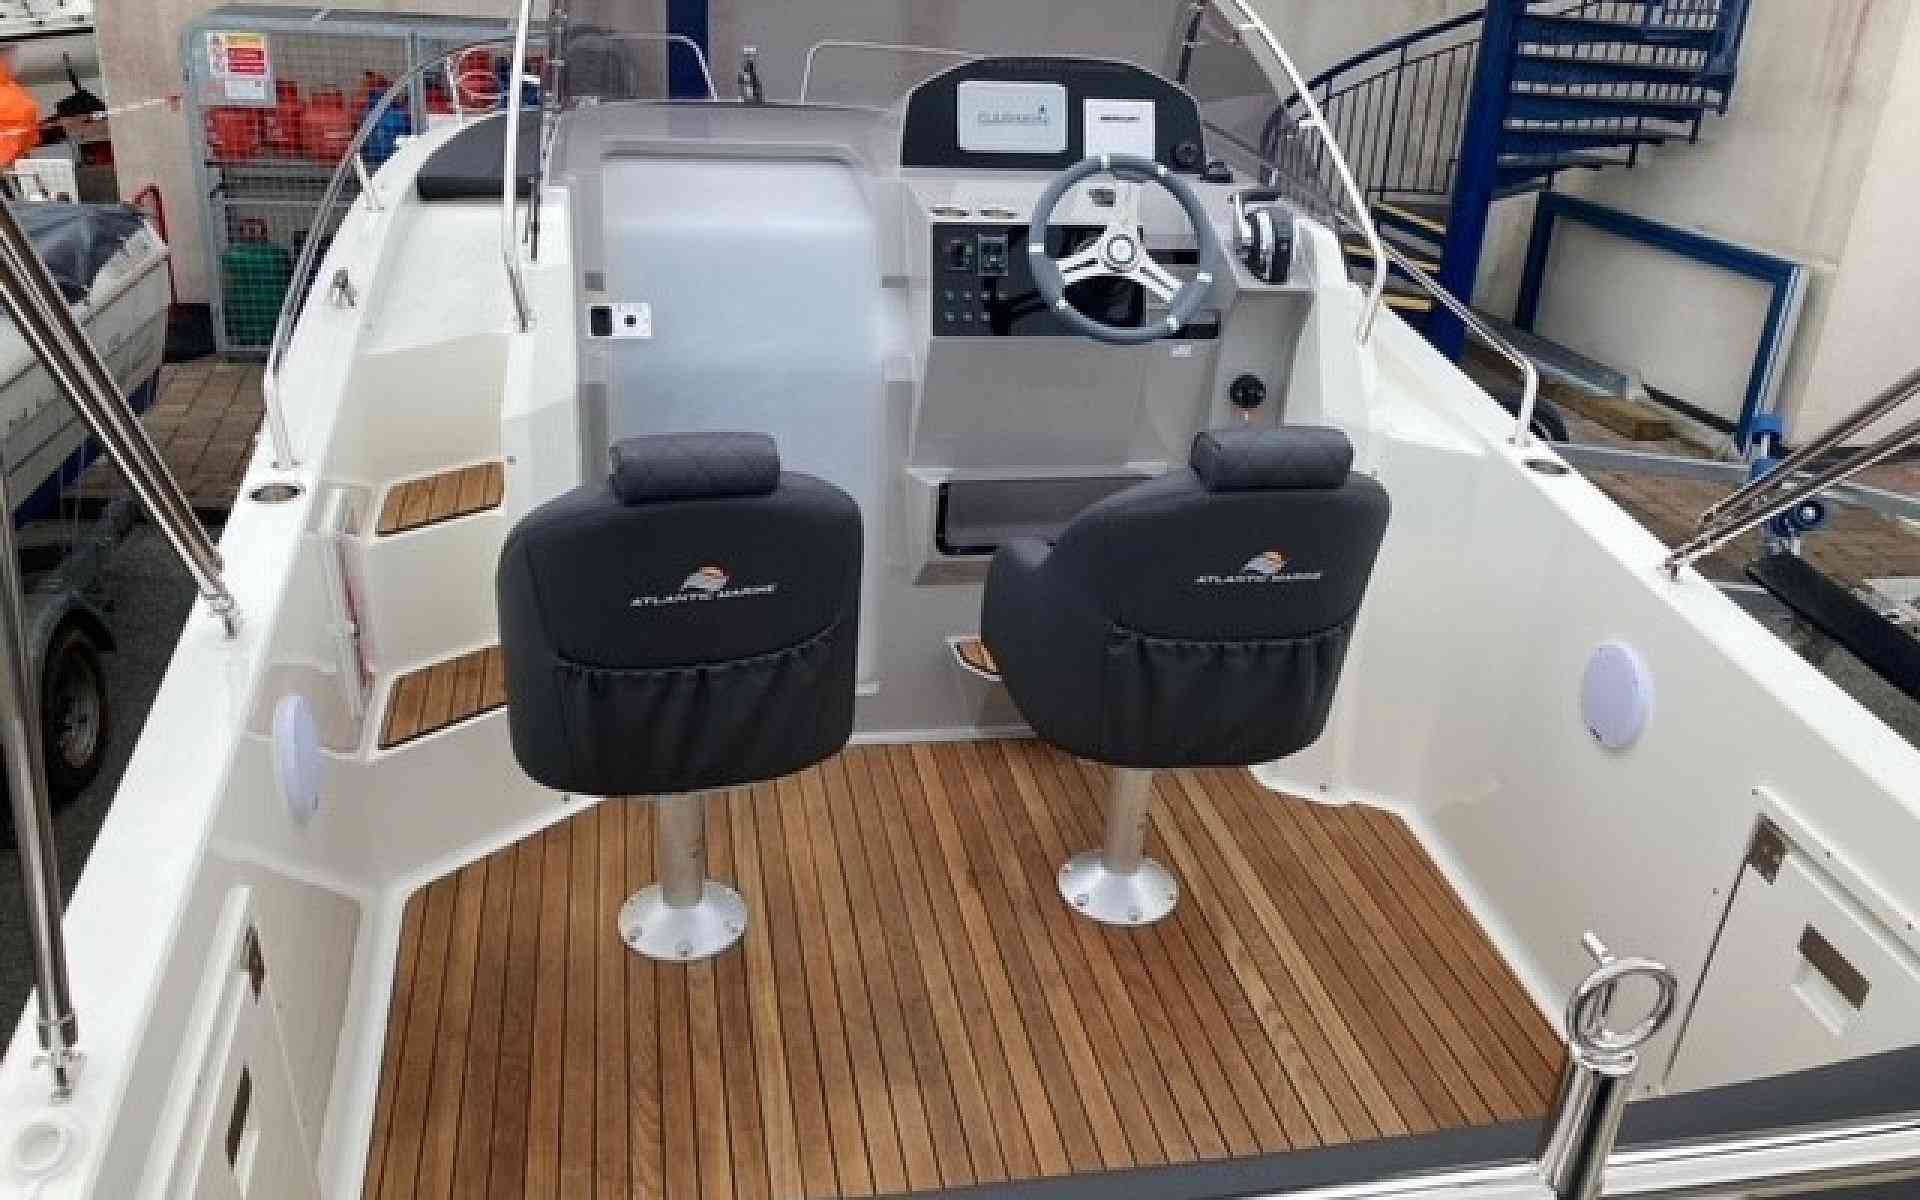 ATLANTIC 730 SUN CRUISER cockpit image new boats for sale in UK 